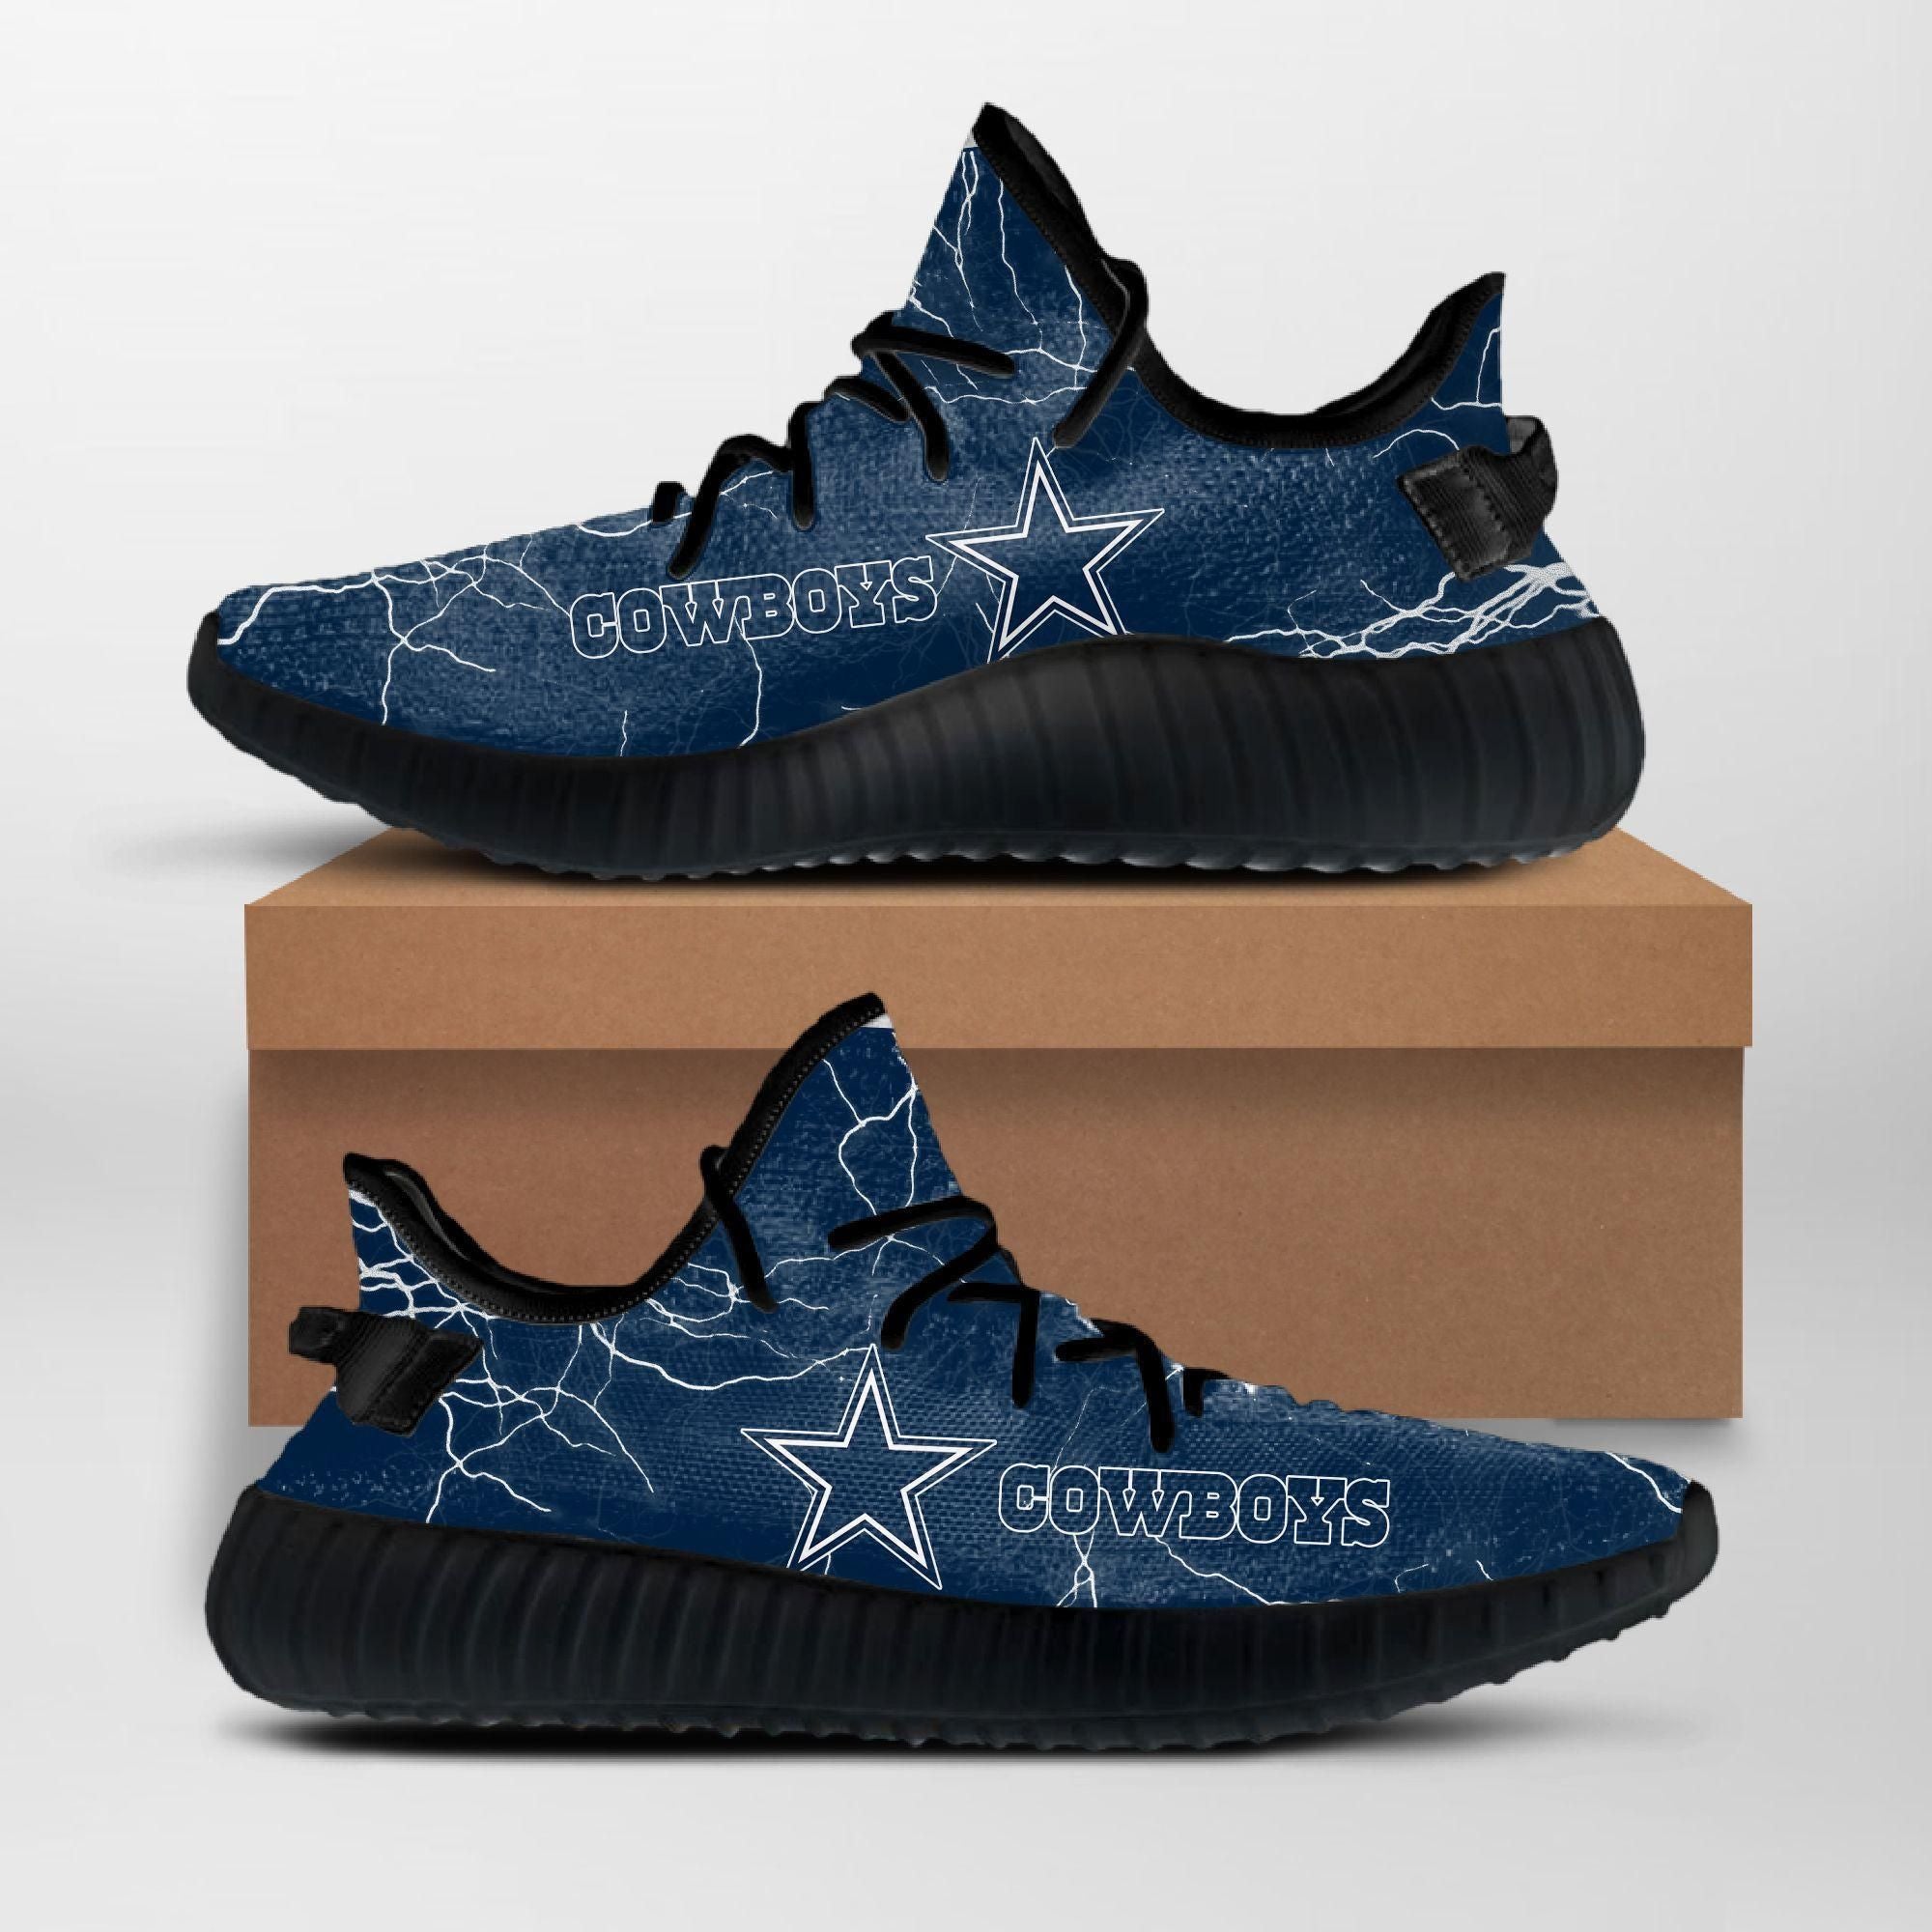 Buy Dallas Cowboys Custom Yeezy NFL Custom Yeezy Shoes For Fans Yeezy Boost 350 V2 Top Trending Custom Shoes Gift